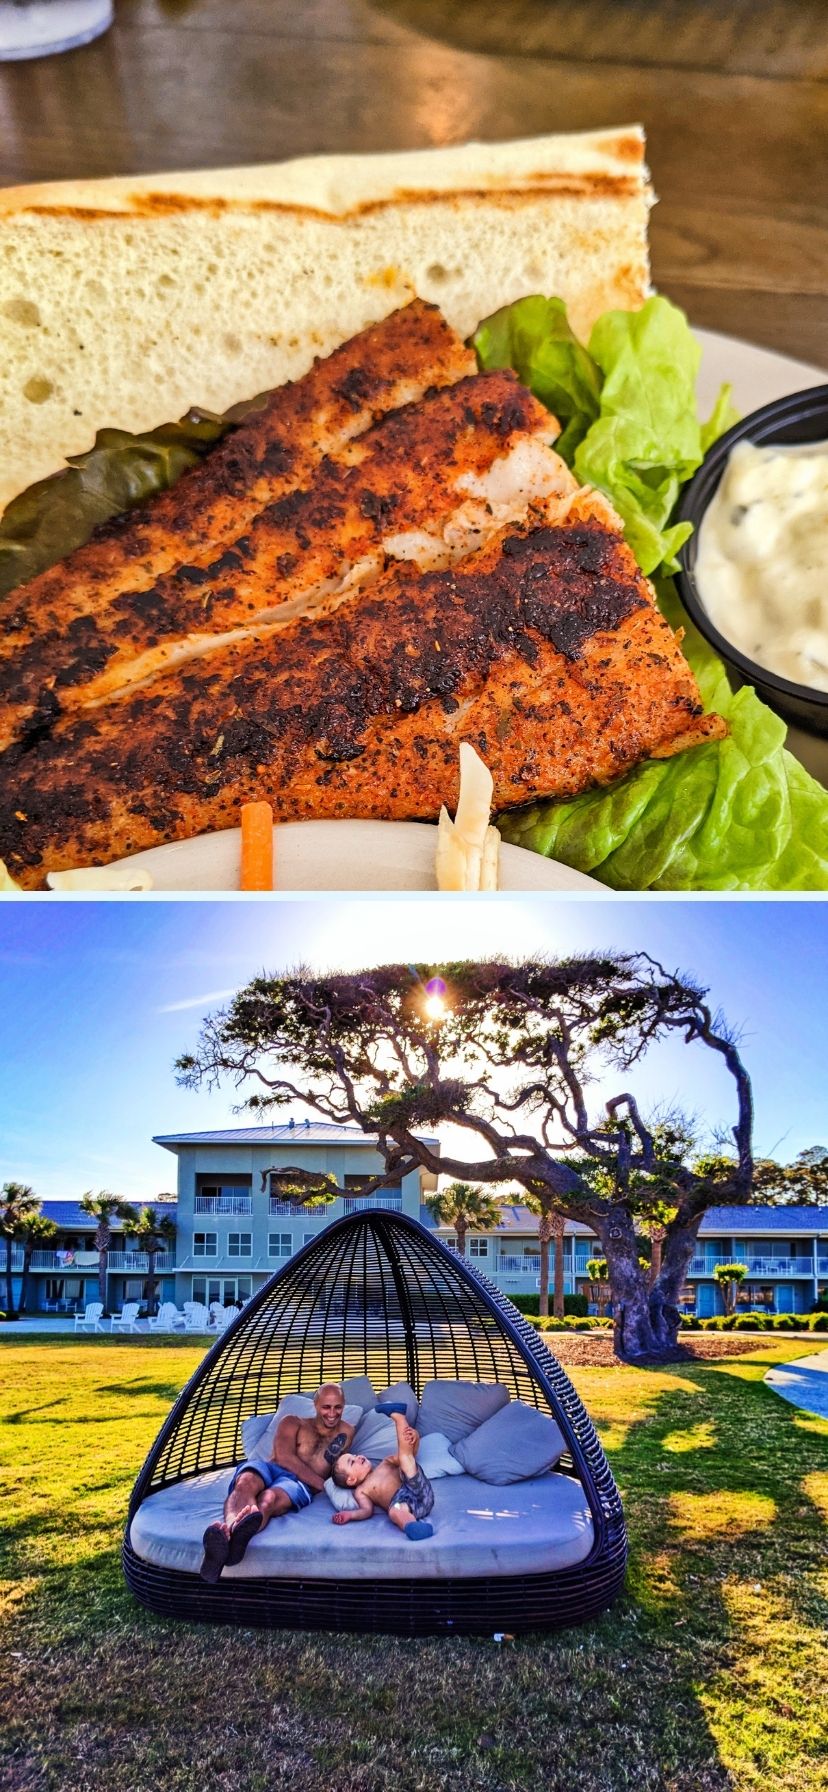 Fried Fish and Beautiful Hotel Jekyll Island Georgia